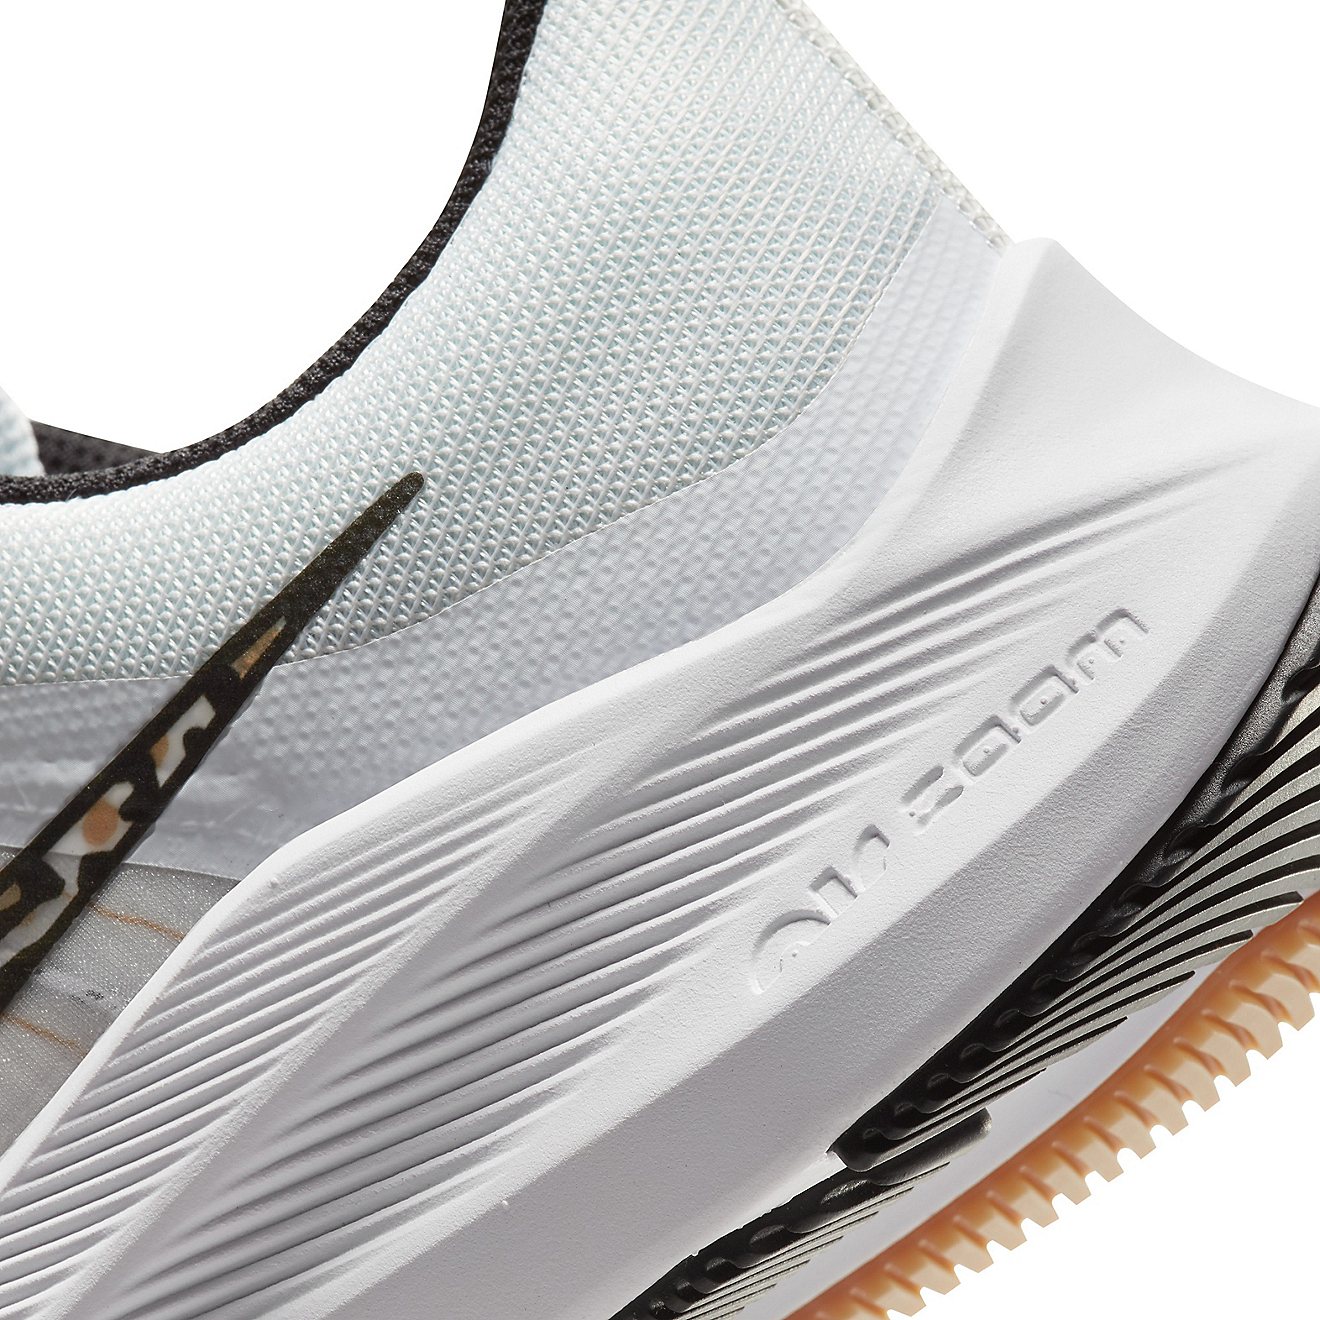 Nike Women's Winflo 8 Leopard Running Shoes | Academy